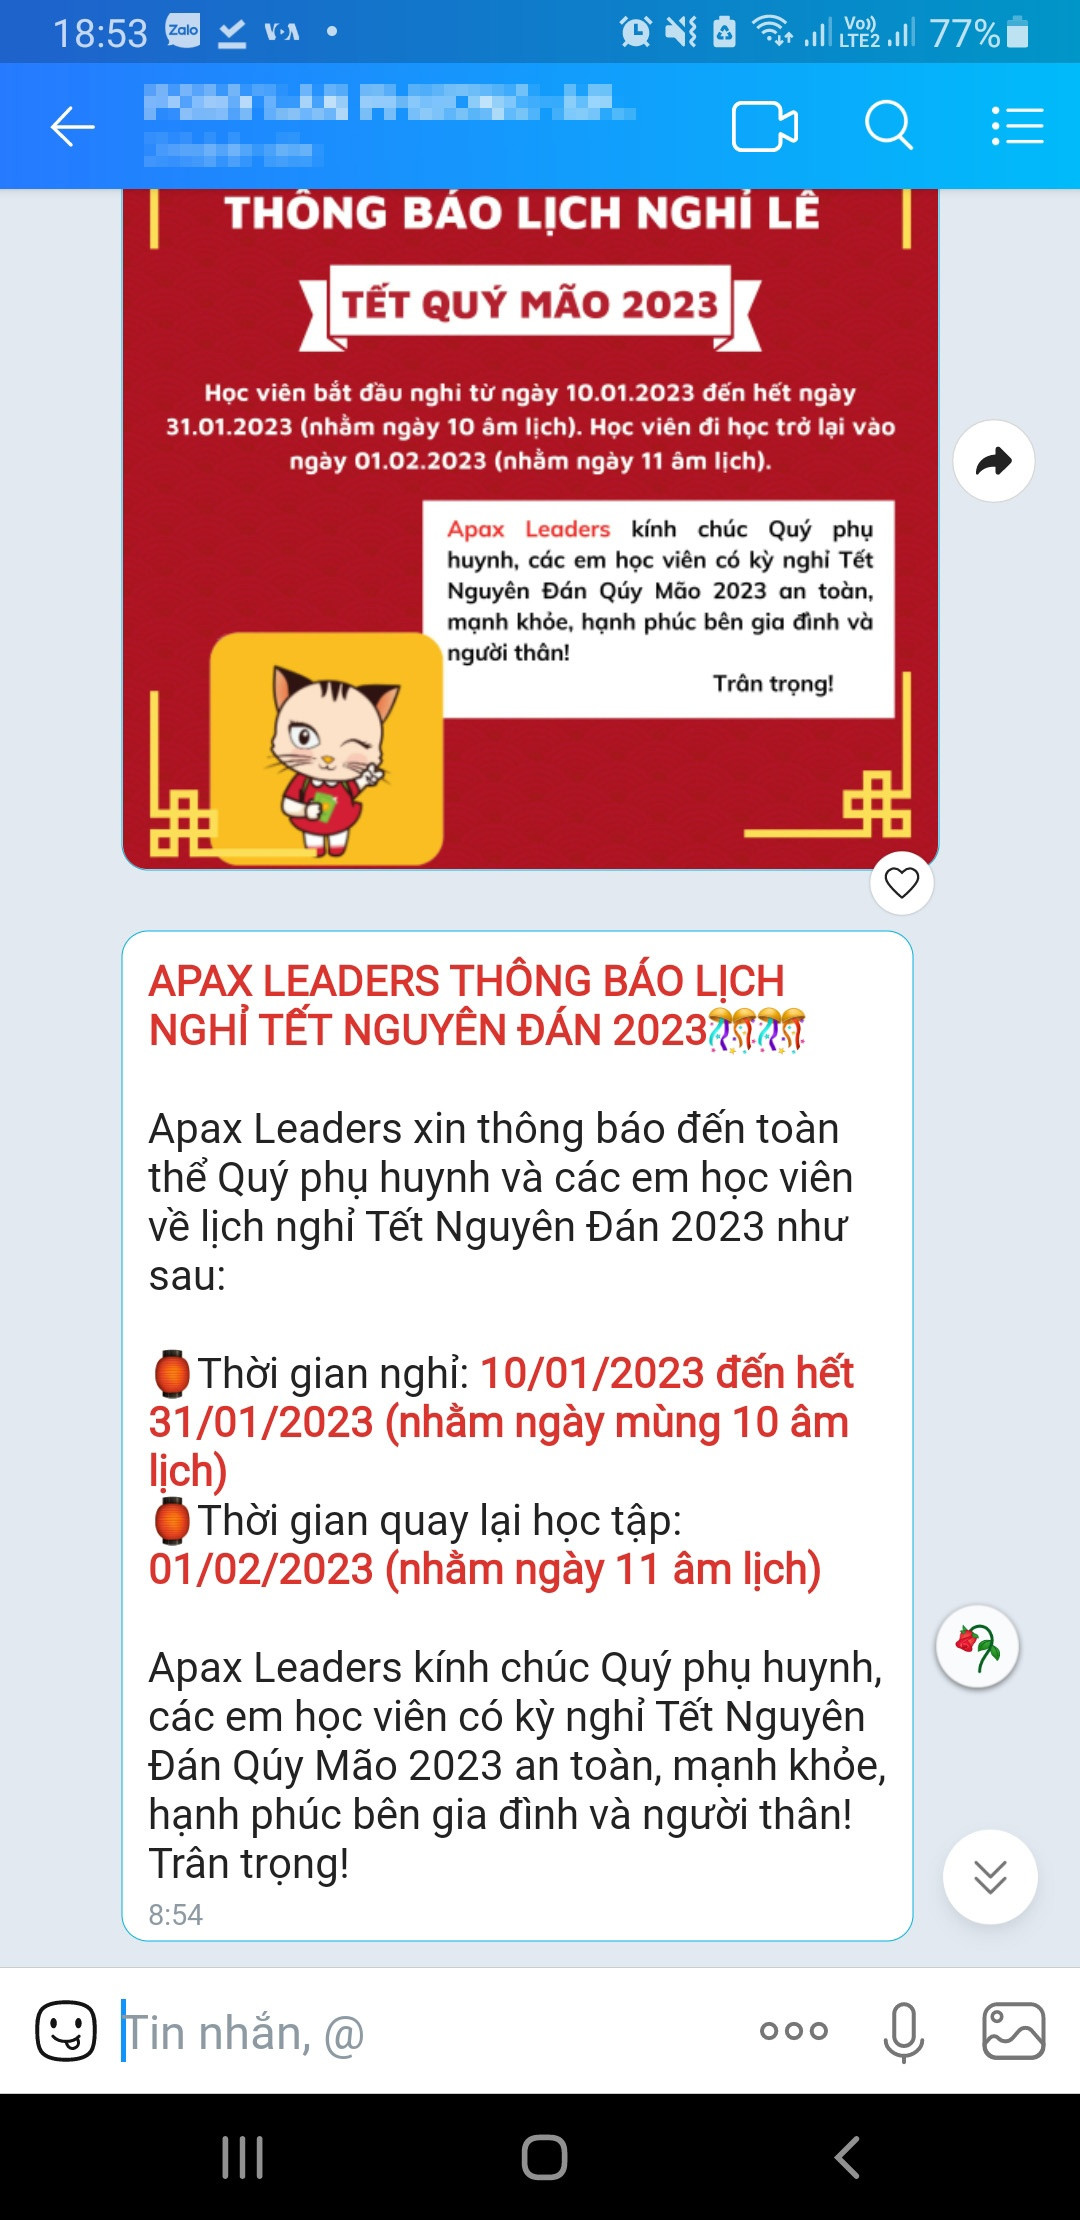 phu huynh to Apax Leaders anh 4